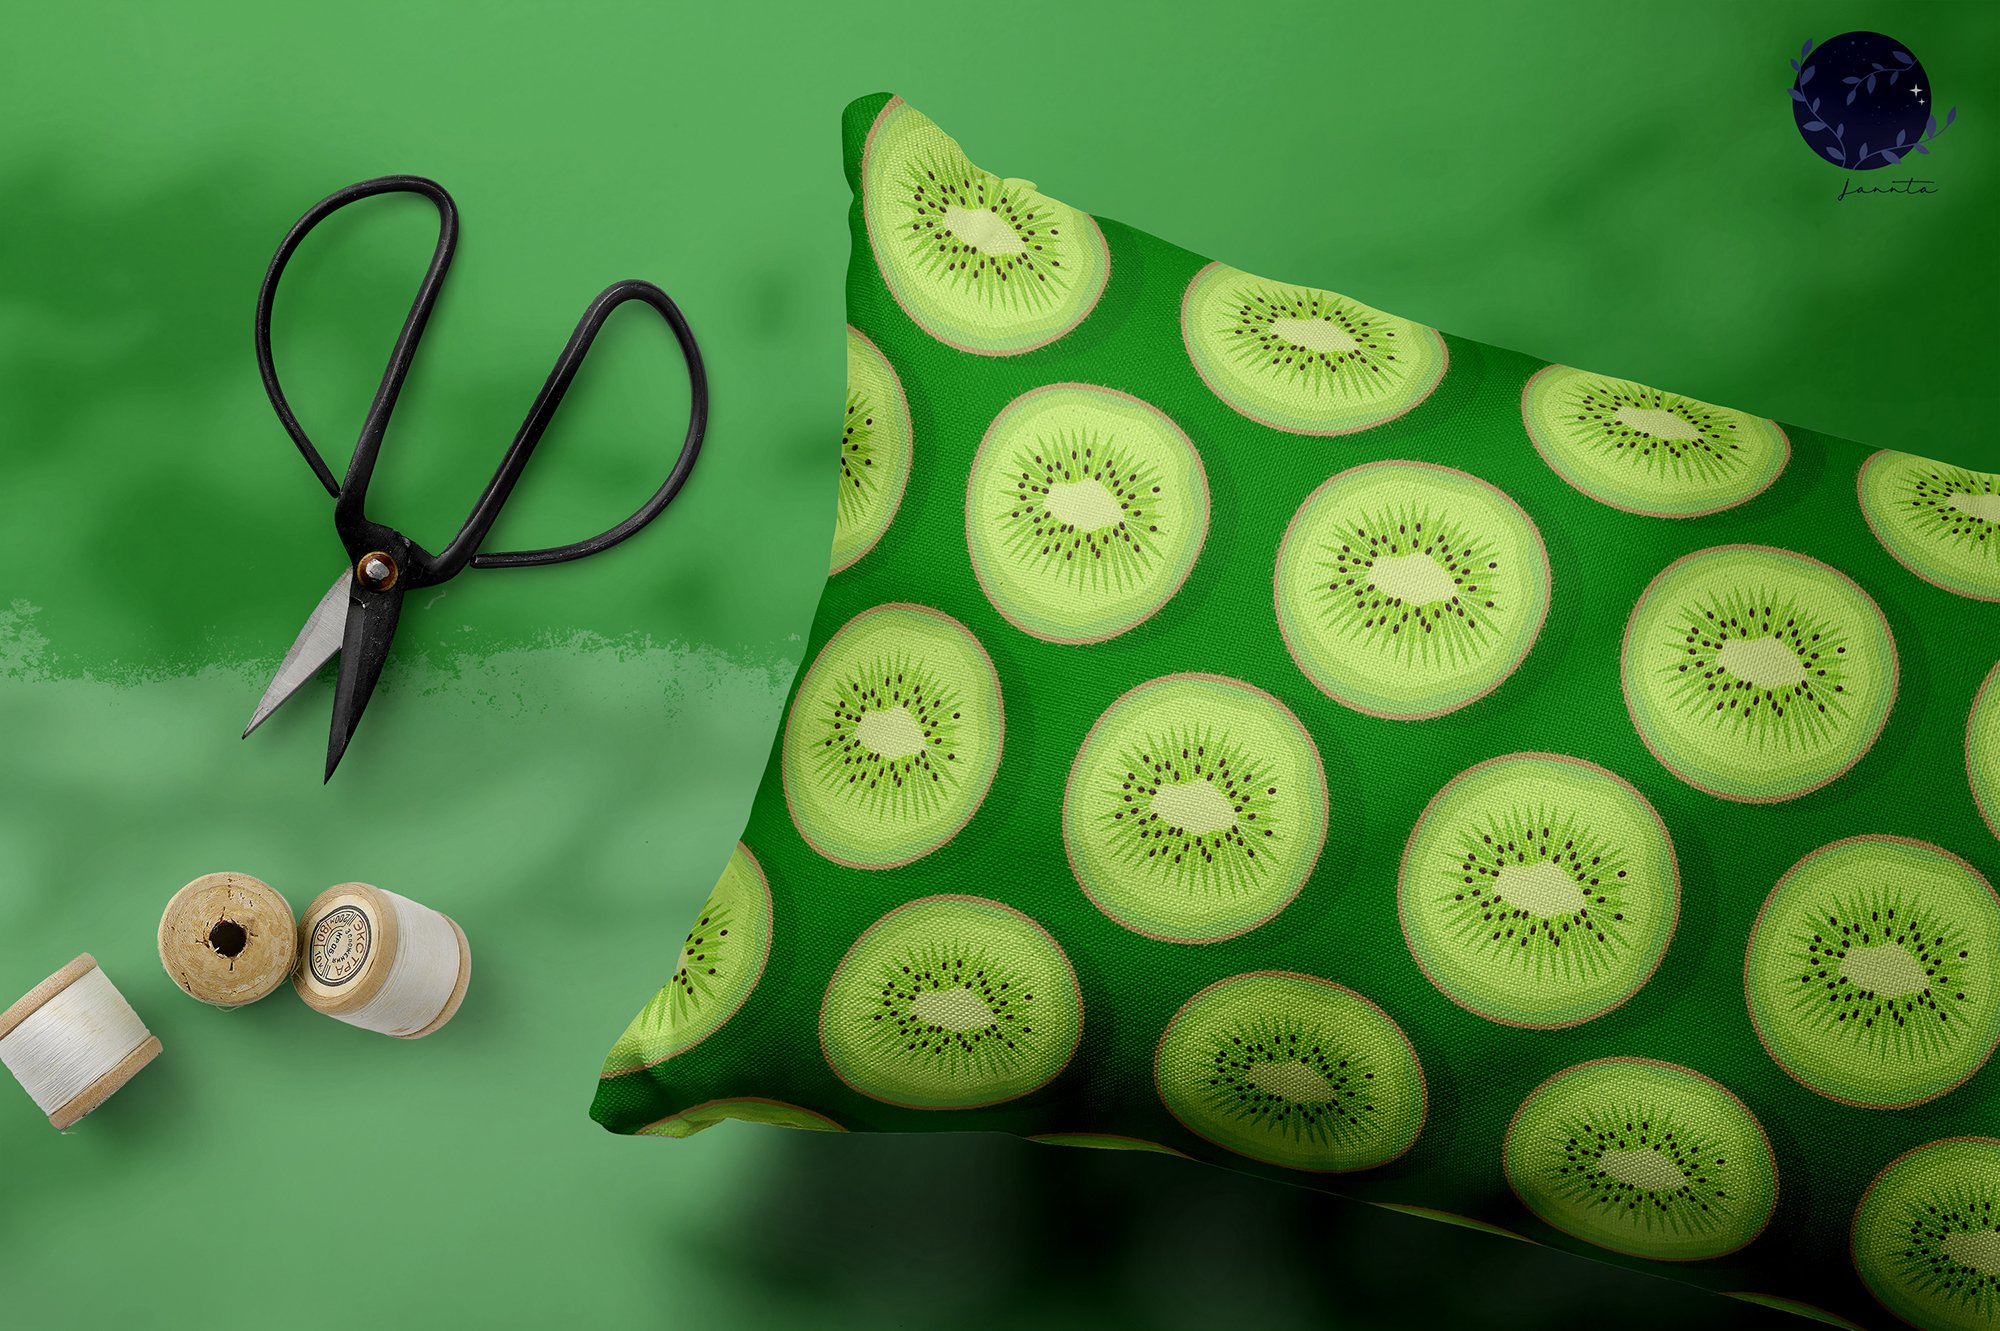 Dark green pillow with light green kiwis.